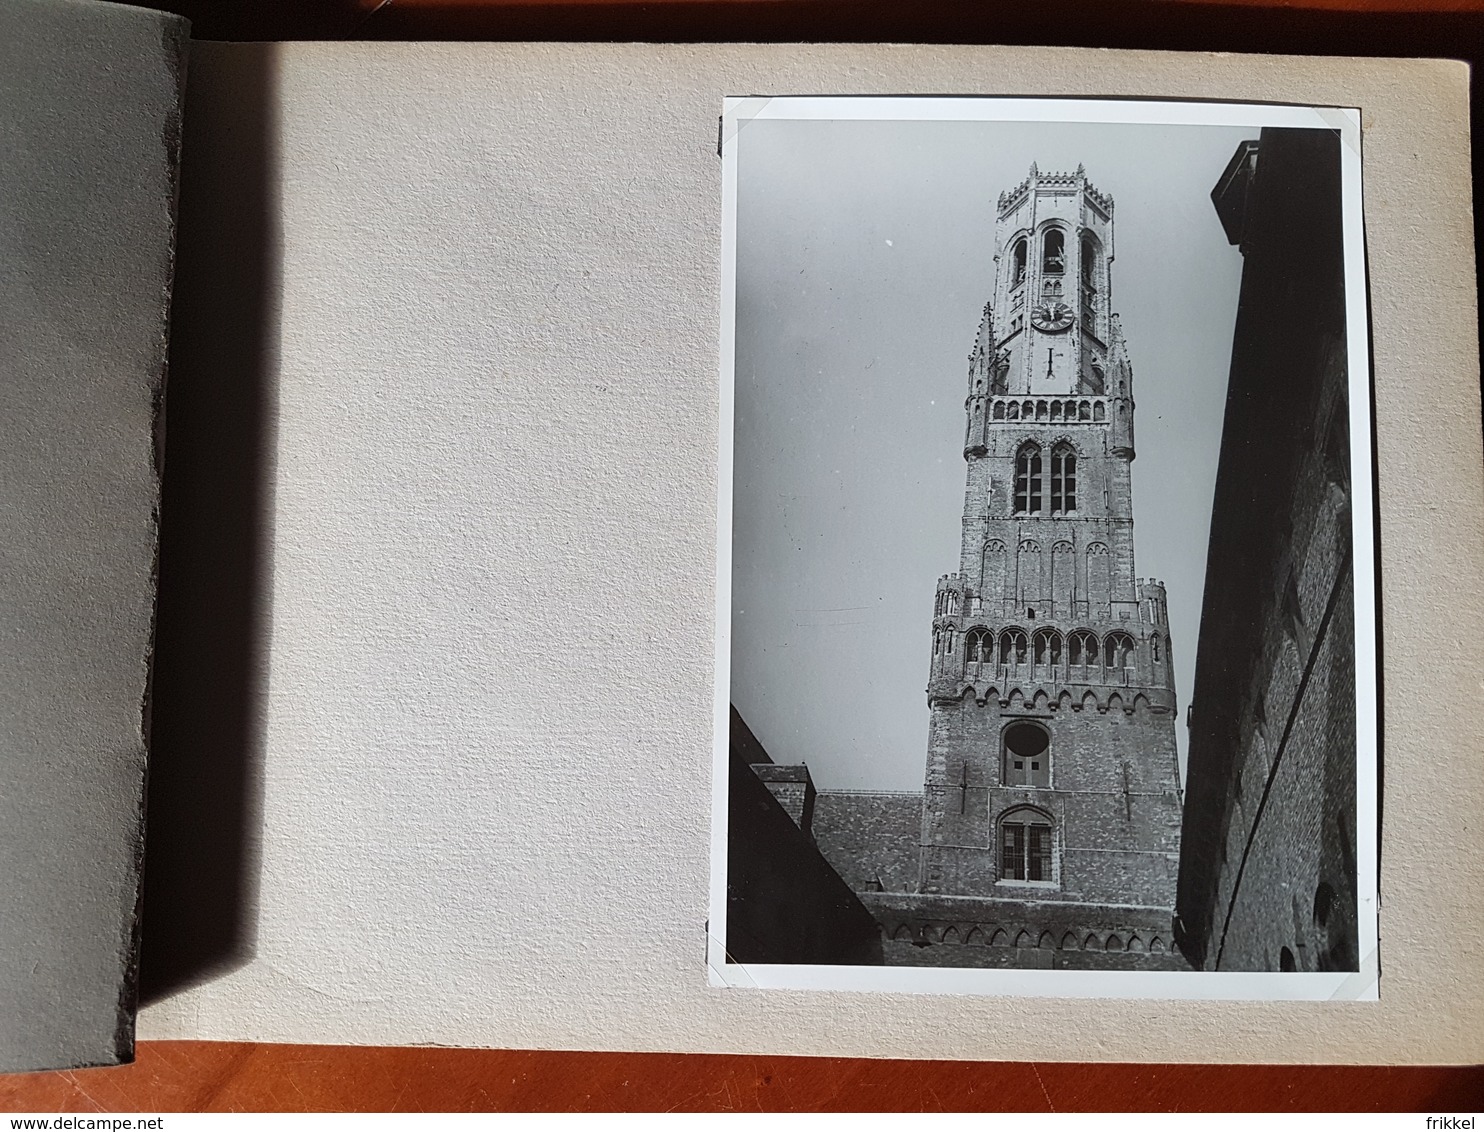 Fotoalbum (20 x 28 cm) Brugge Bruges 1950 met 16 mooie fotos van Brugge (13 x 18 cm) foto album